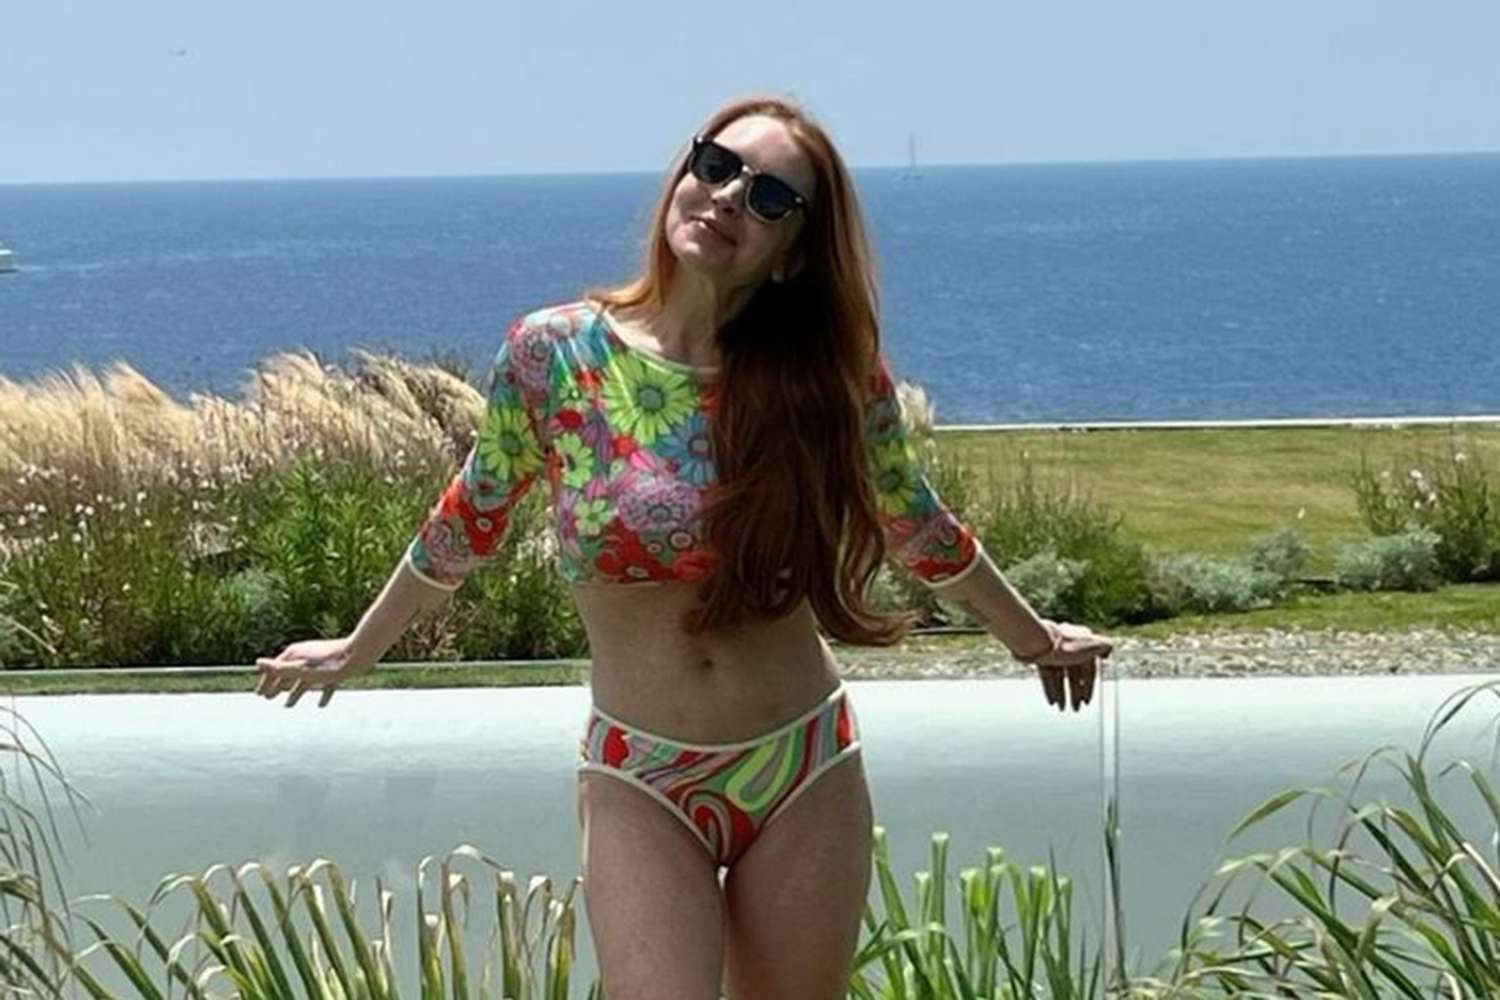 Lindsay Lohan Rocks a Colorful Swimsuit During Lavish Mykonos Vacation